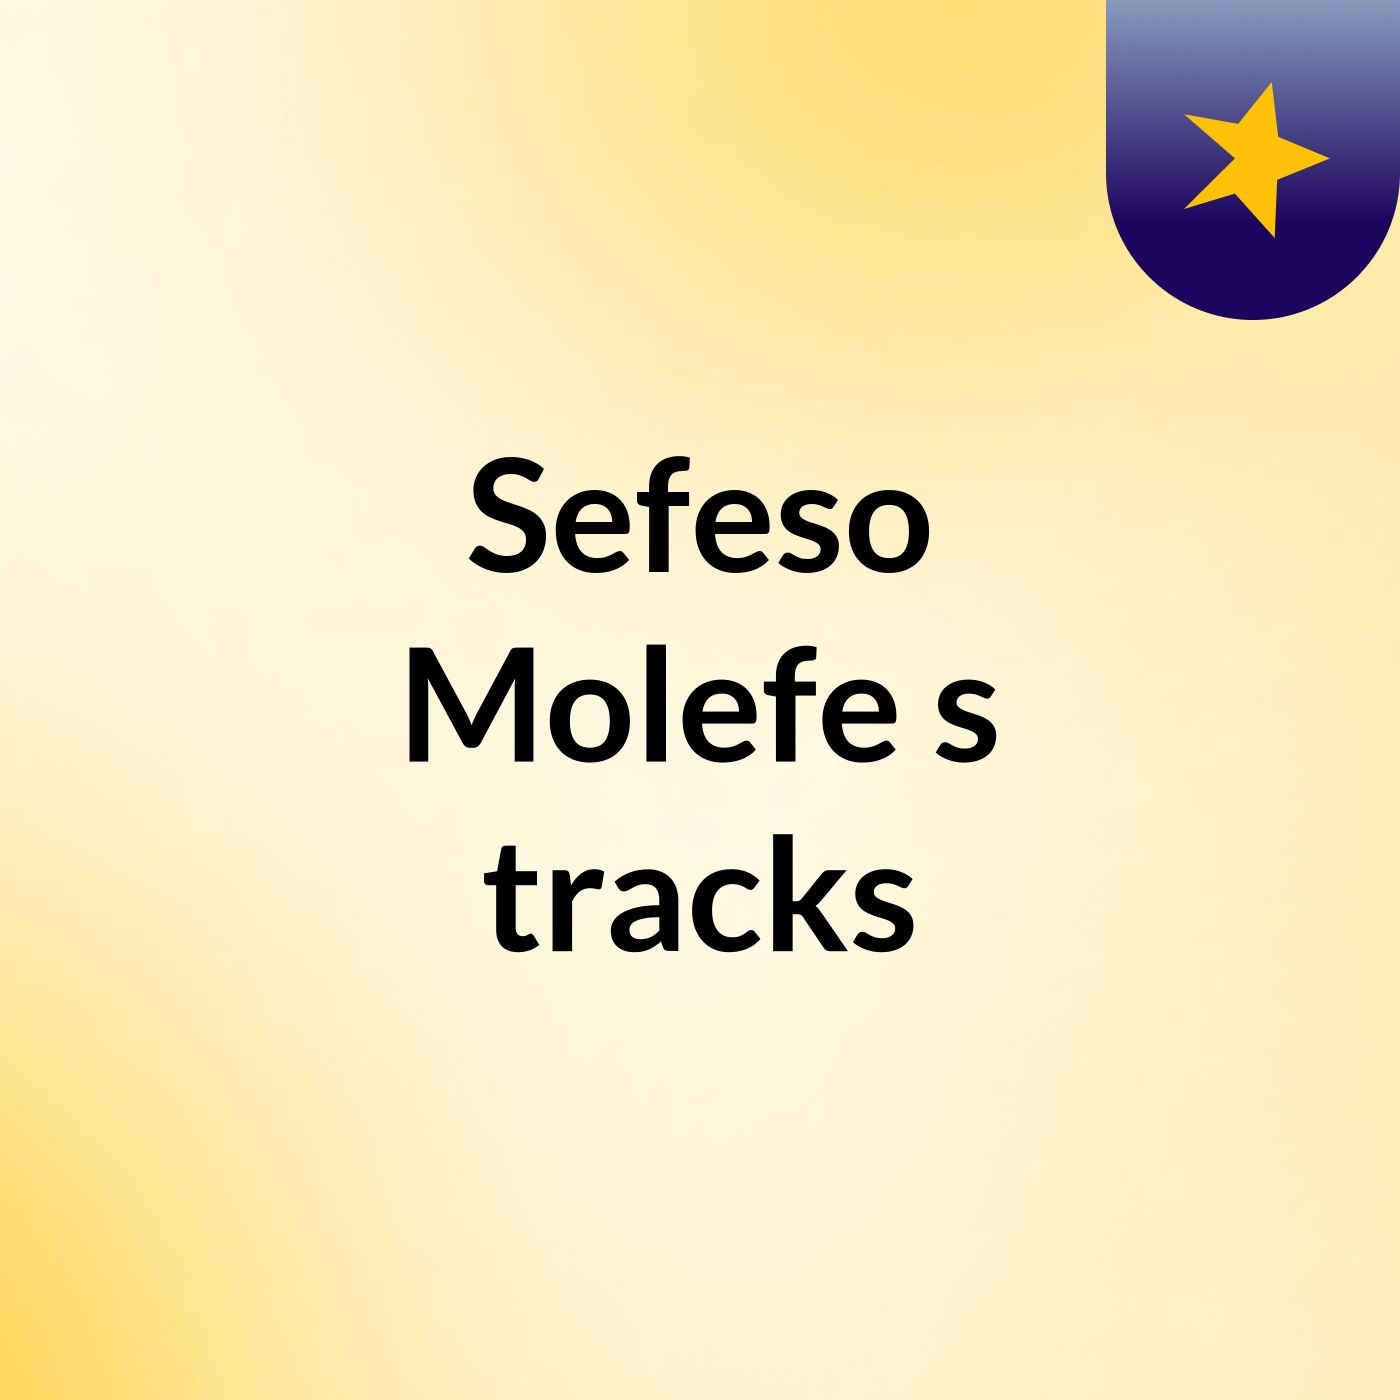 Episode 21 - Sefeso Molefe's tracks